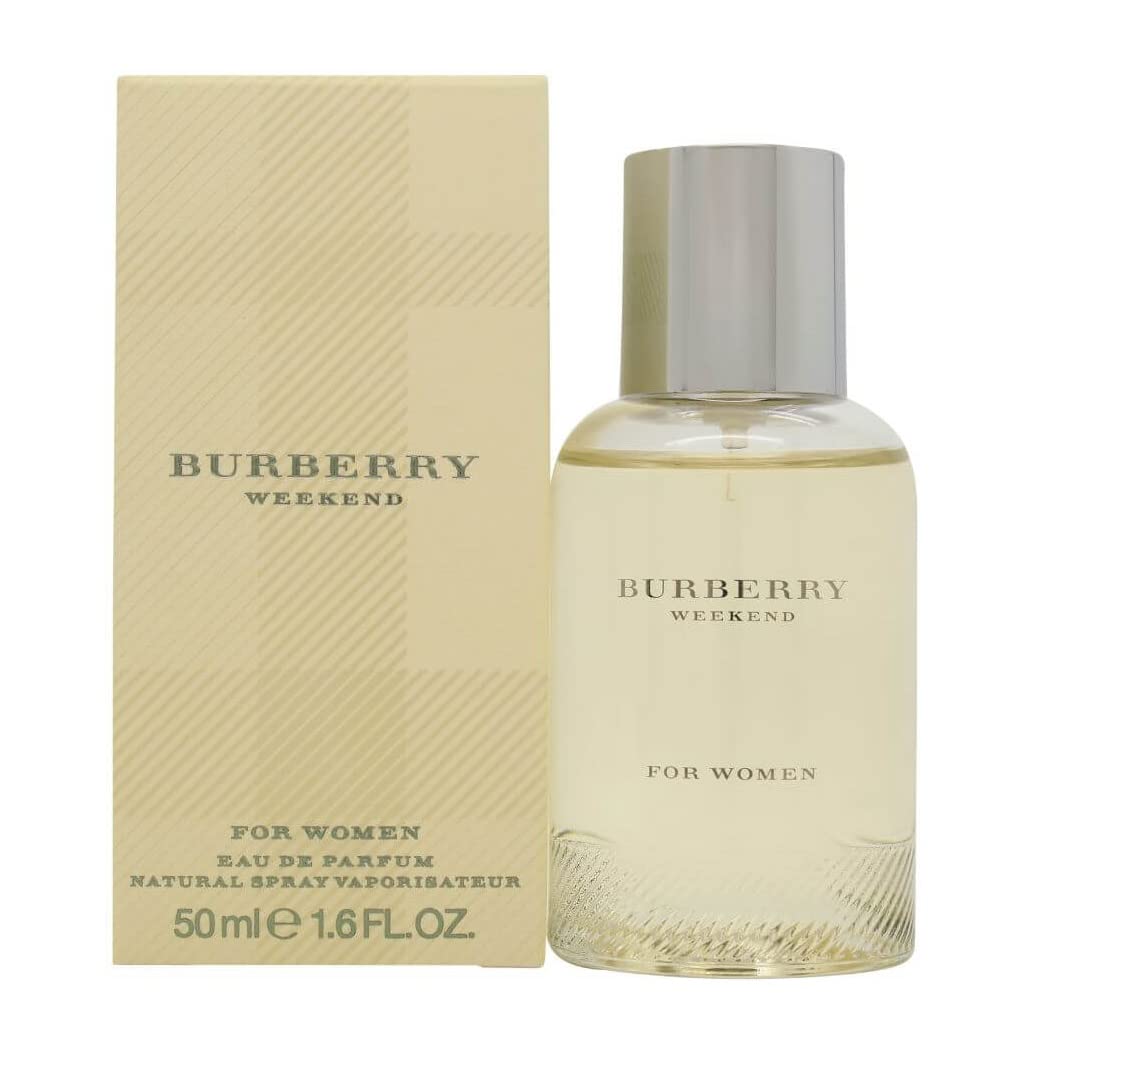 Mua BURBERRY Weekend Women Eau De Parfum 50 ml trên Amazon Đức chính hãng  2023 | Giaonhan247